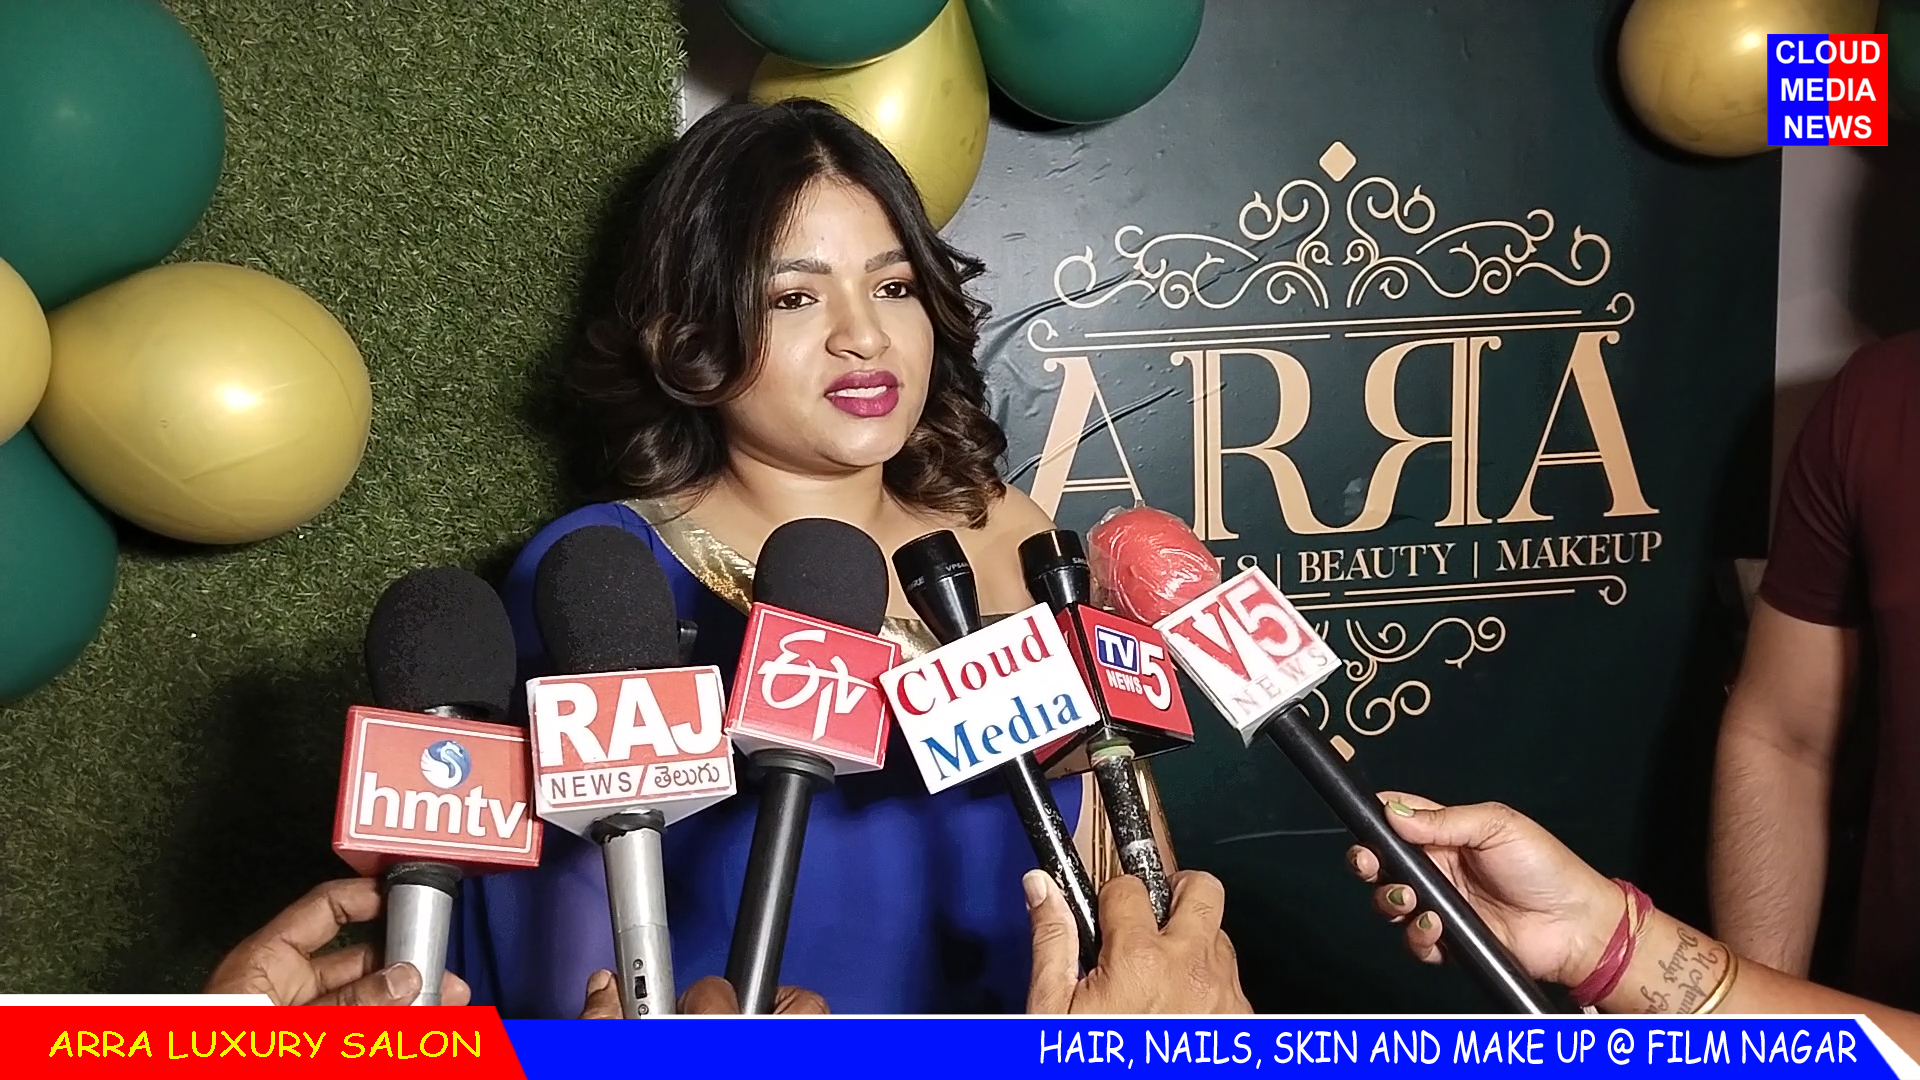 ARRA Luxury Salon Hair, nails, skin and make up @ film nagar || CloudMediaNews